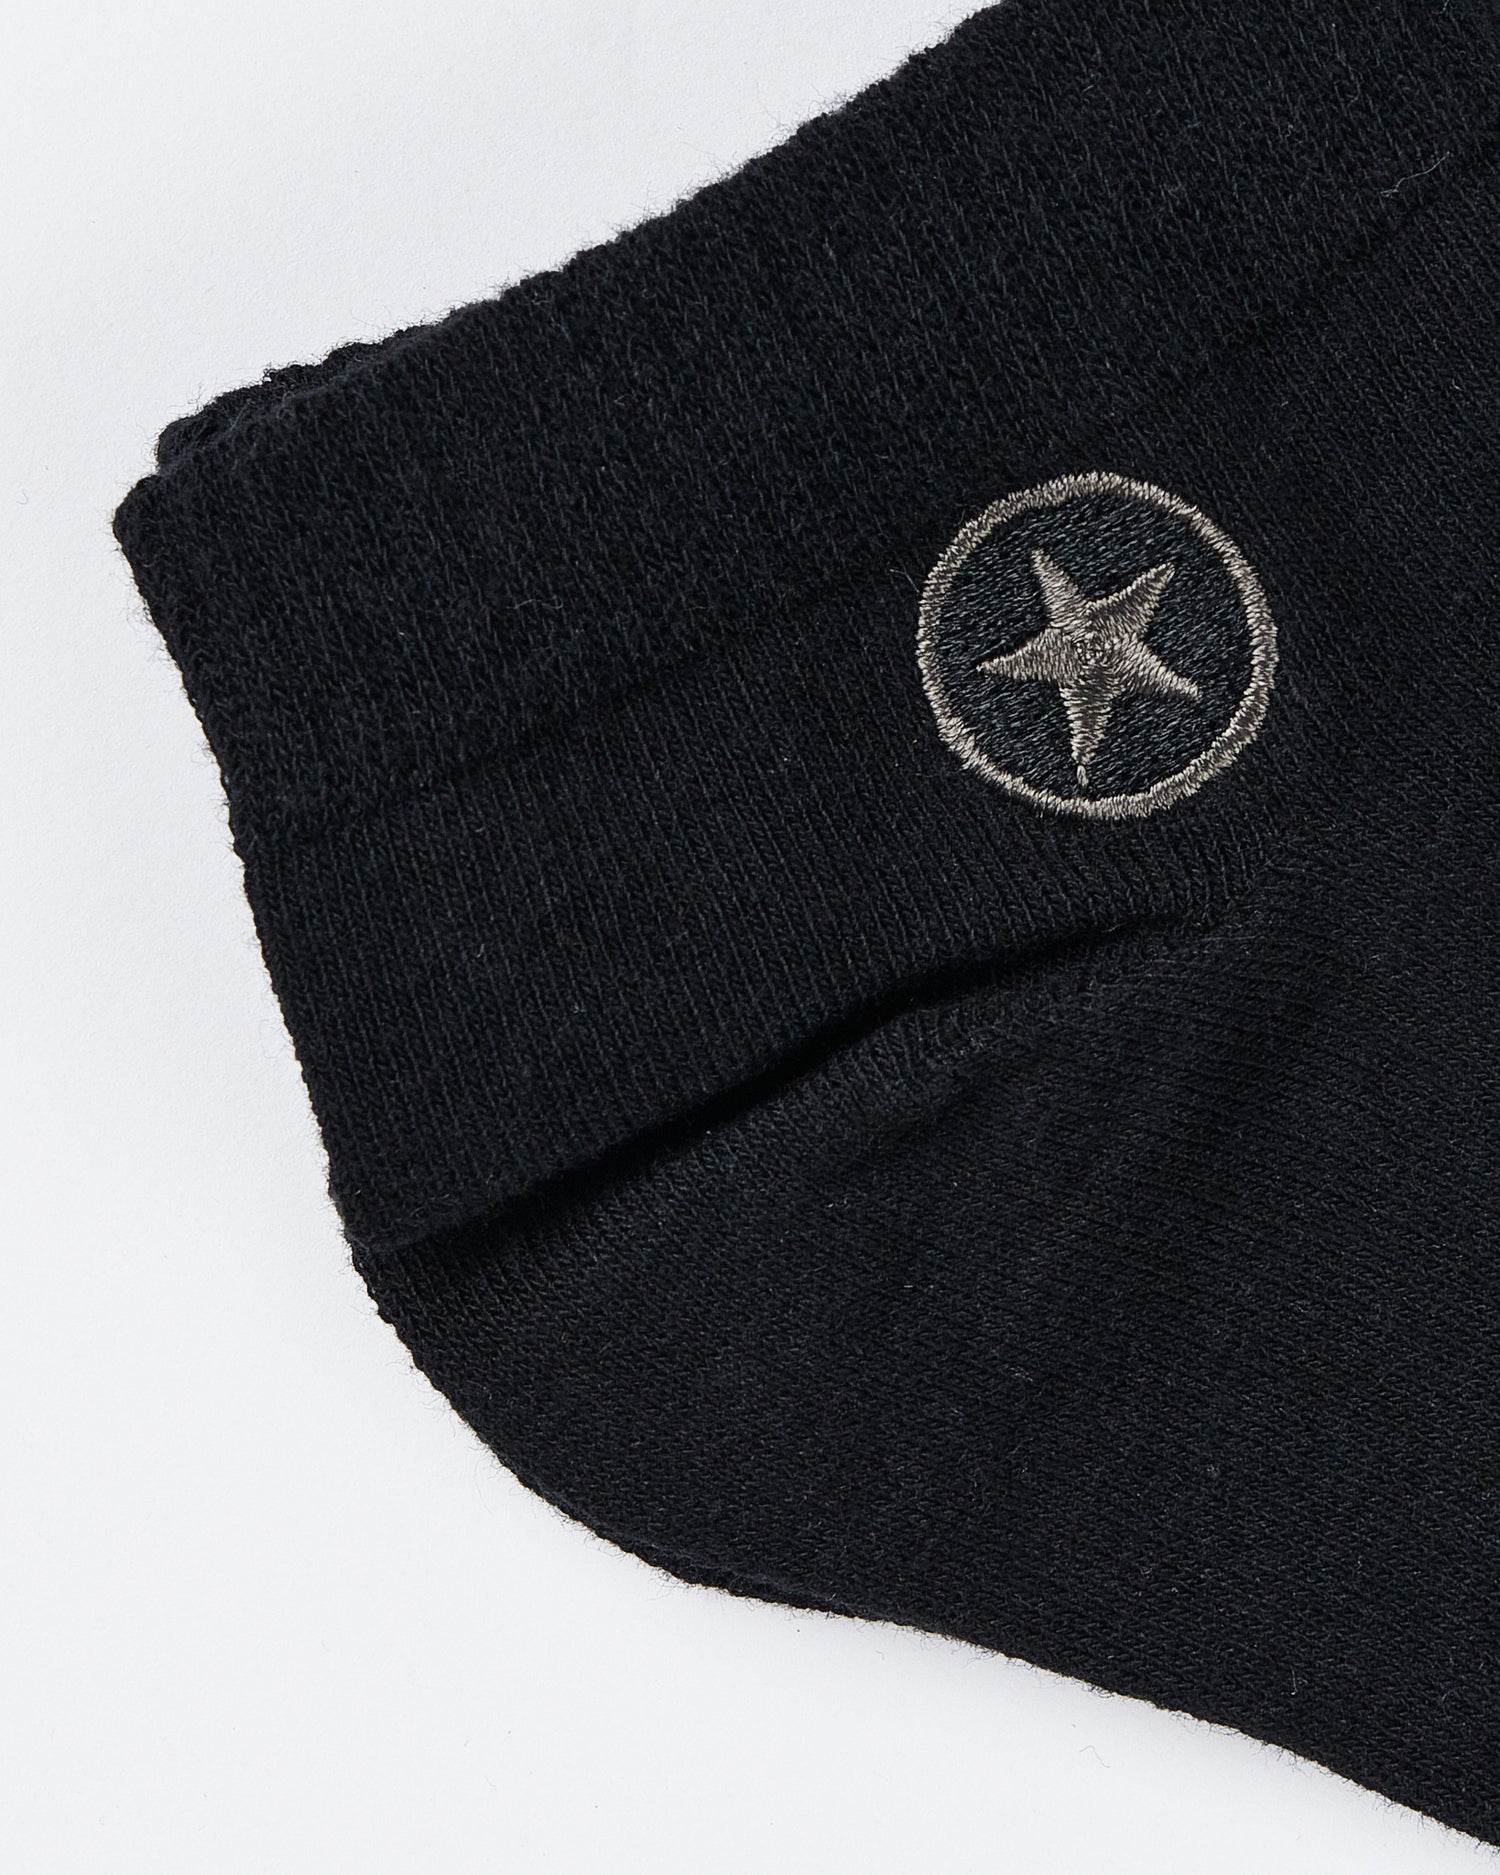 CVS Star Embroidered Black Low Cut 1 Pairs Socks 2.10